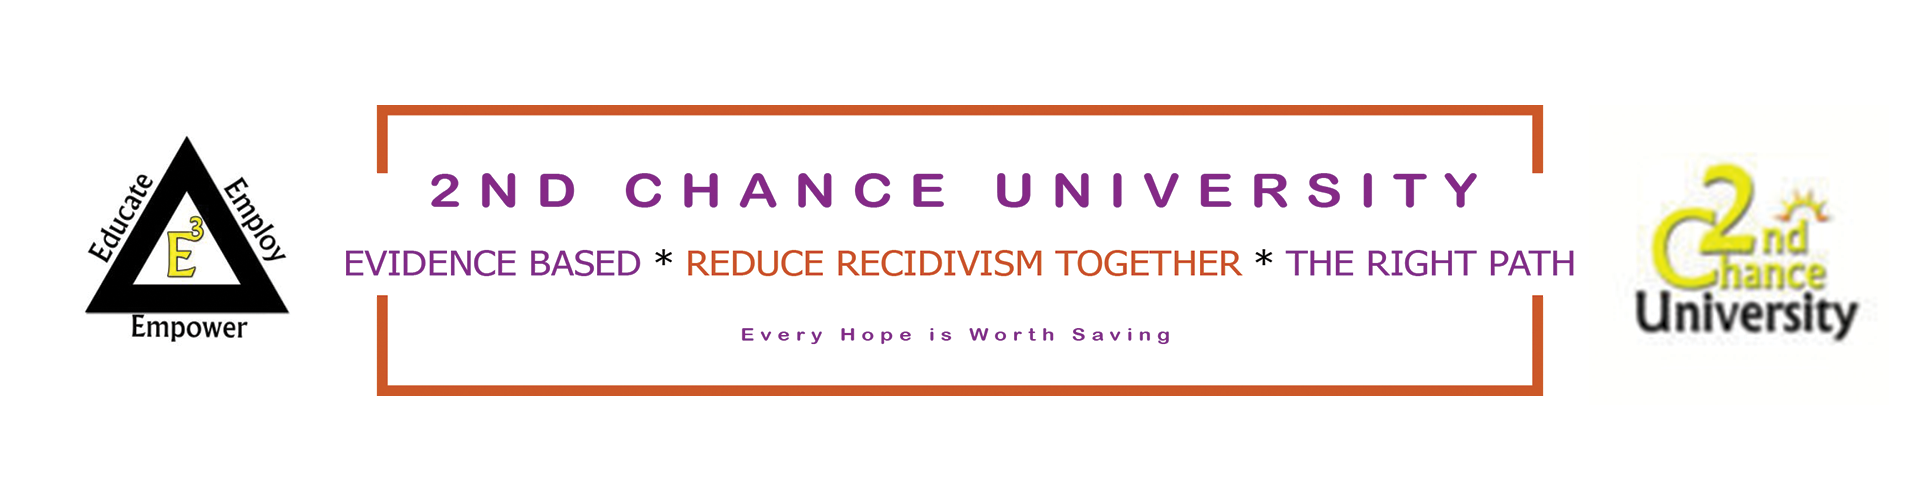 2nd chance university banner